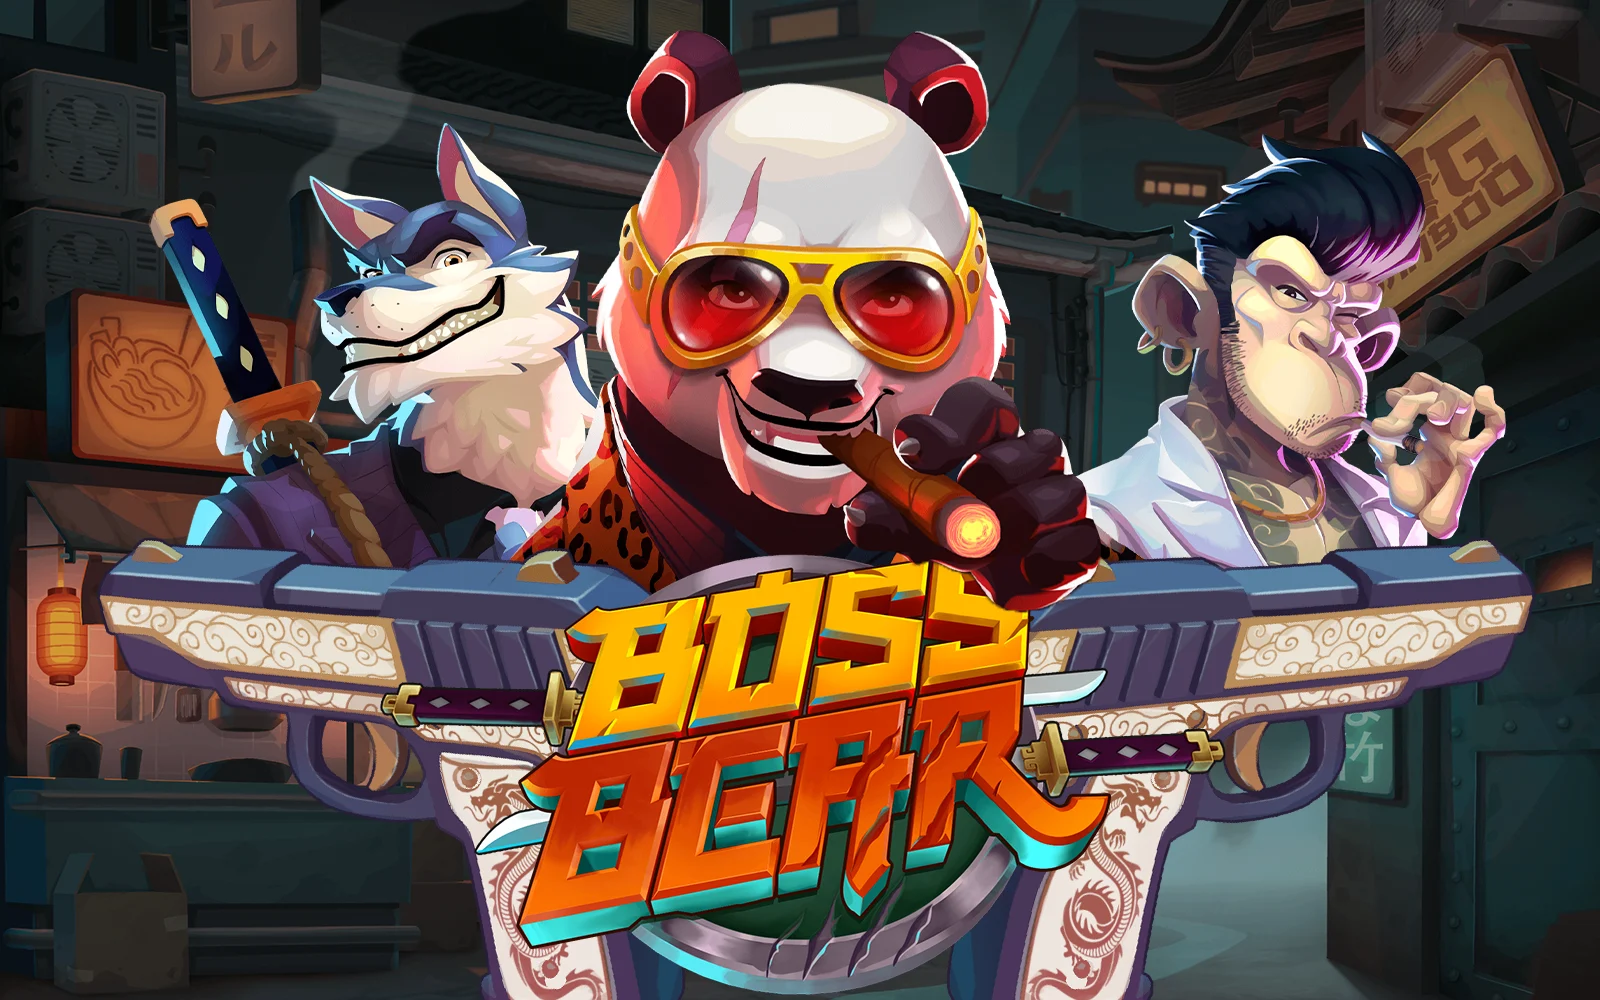 Play Boss Bear on Starcasino.be online casino